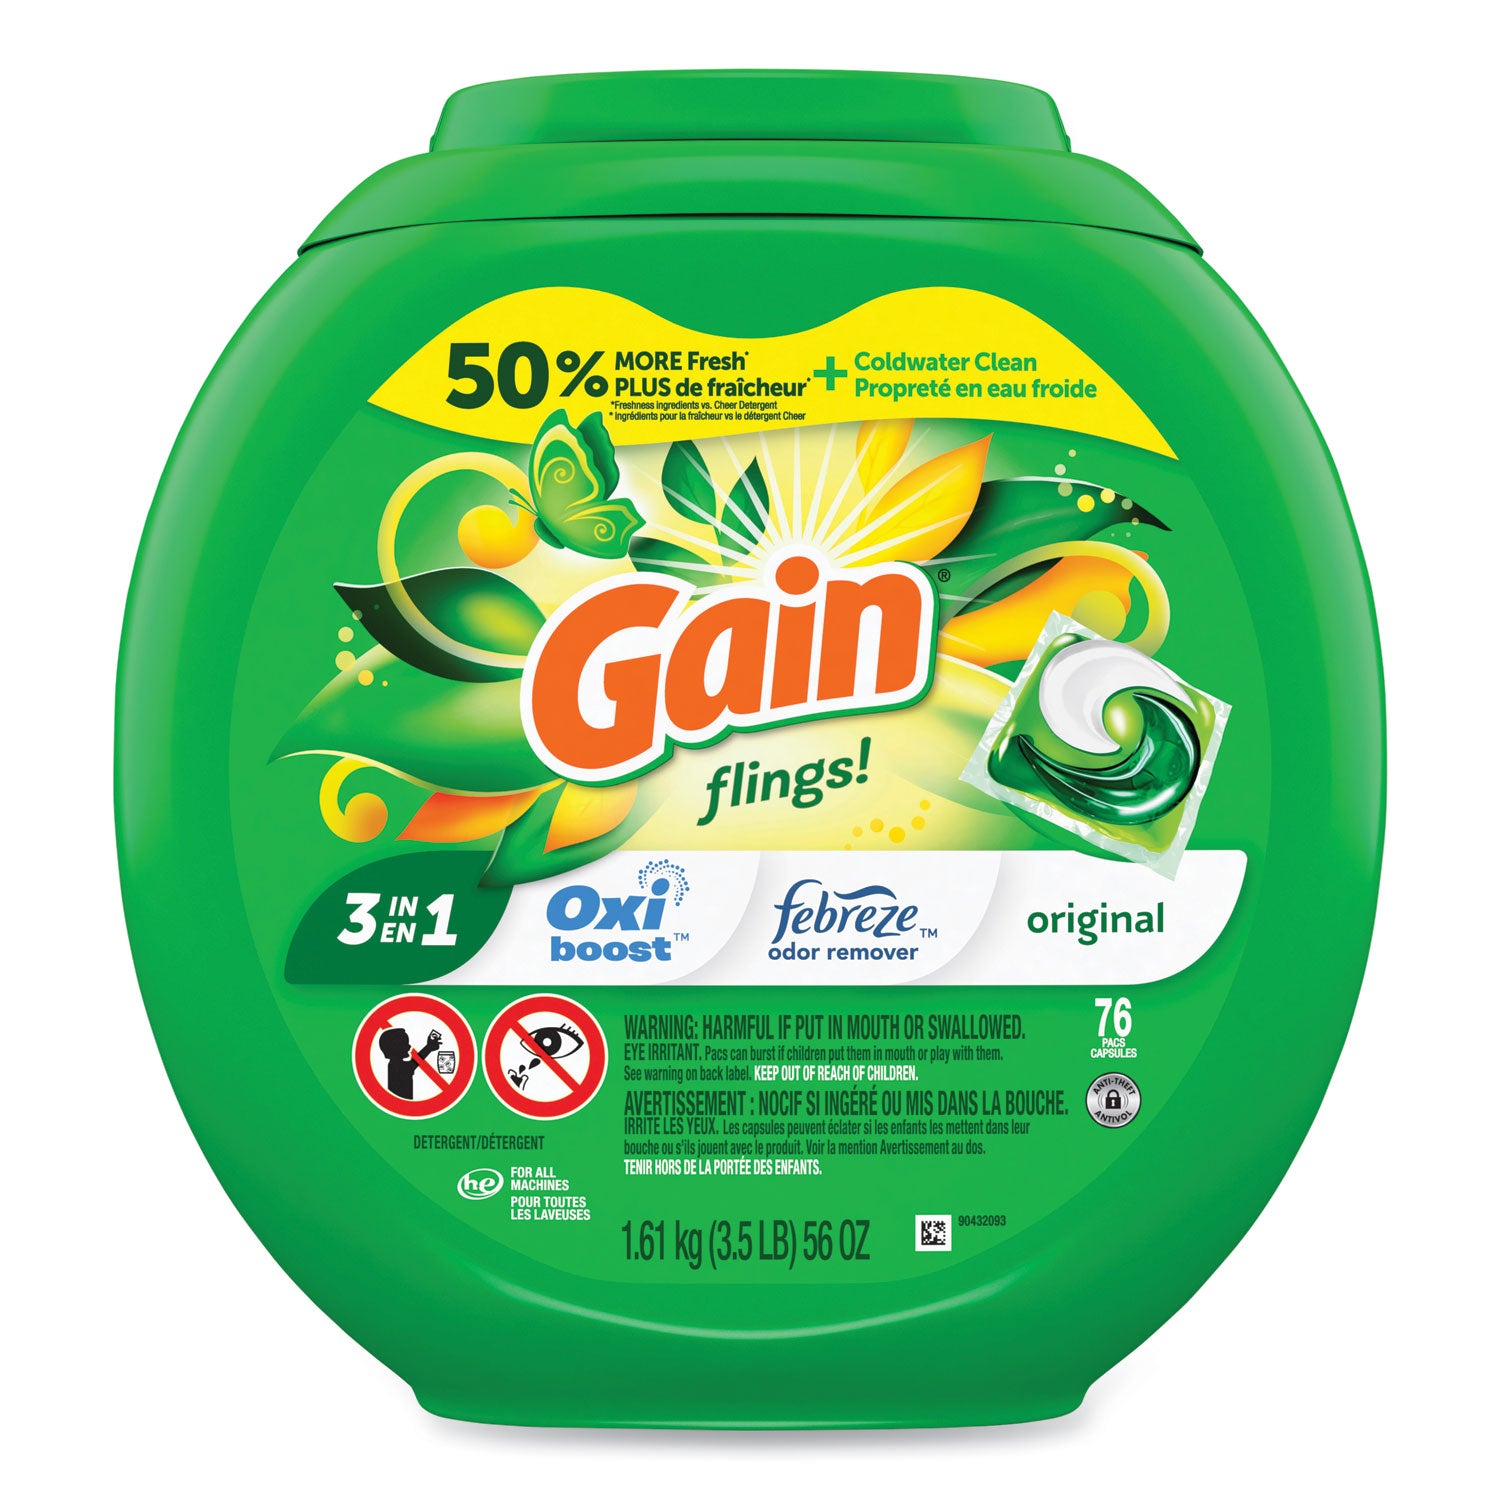 flings-detergent-pods-original-76-pods-tub-4-tubs-carton_pgc09207ct - 2